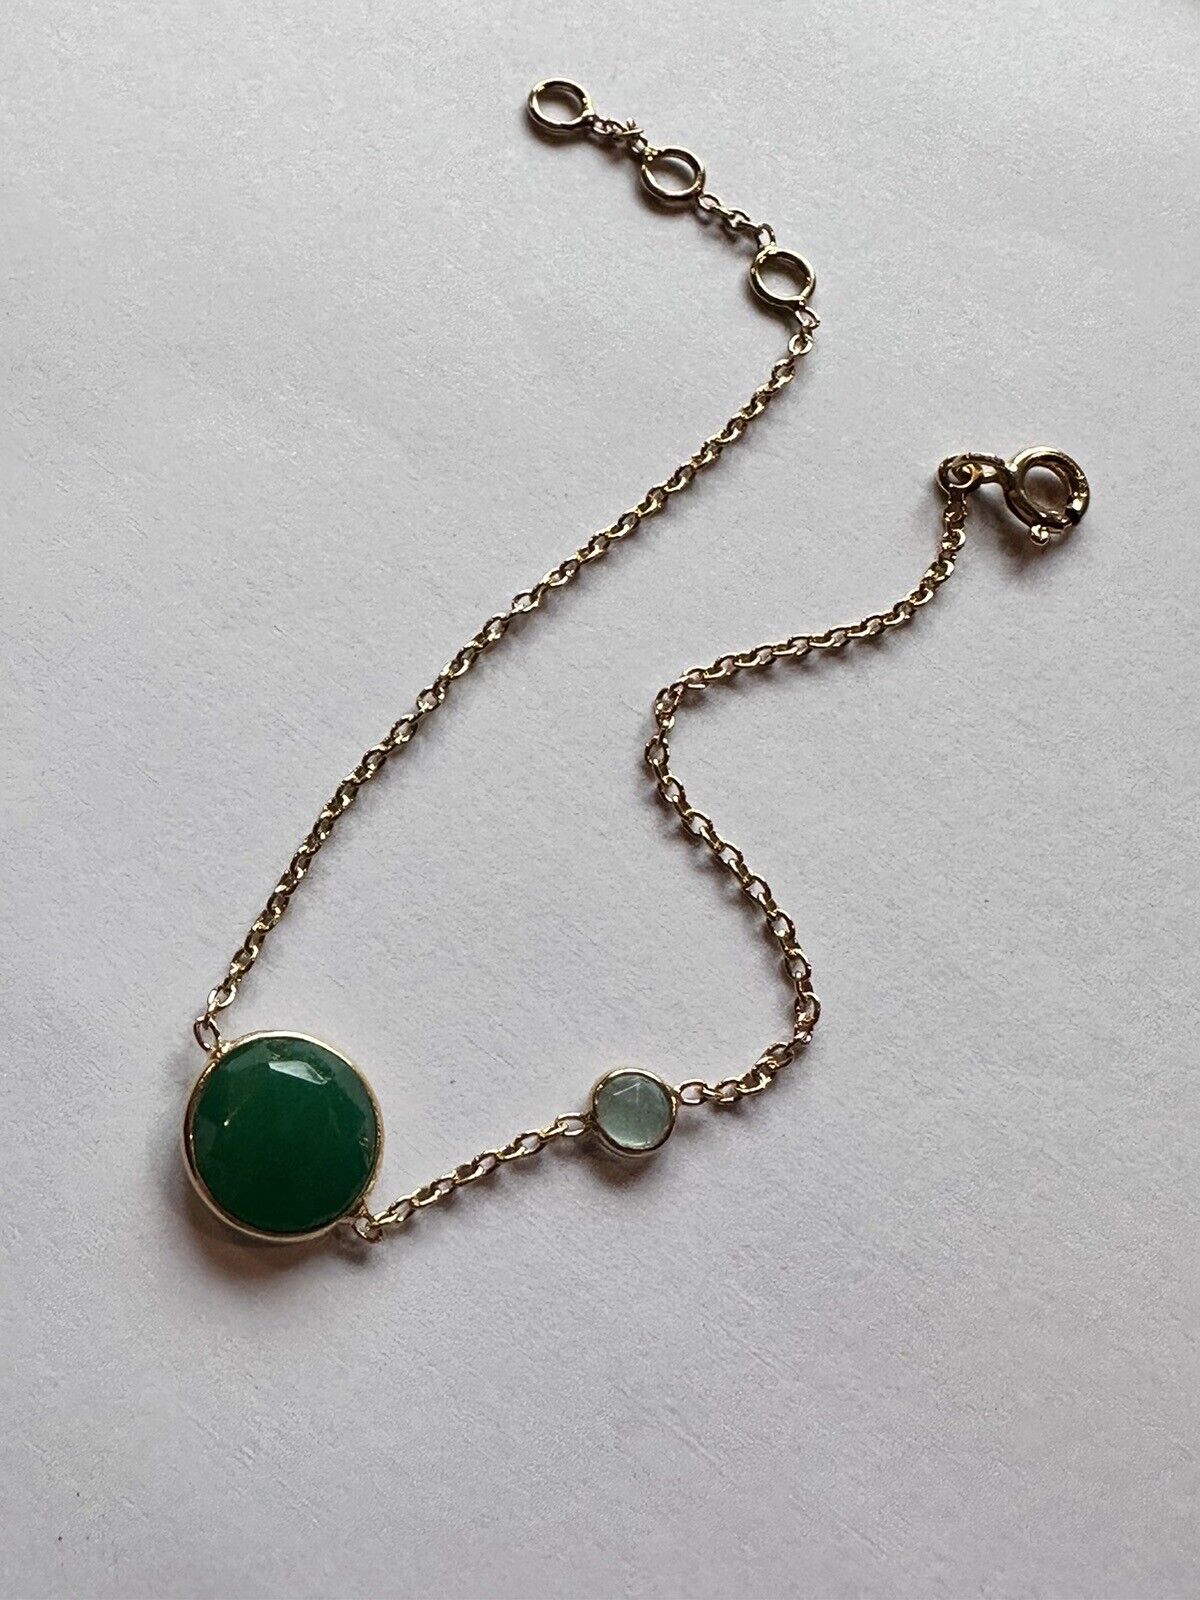 18ct Gold Vermeil On Silver 925 Green Gemstone Bracelet New Old Stock